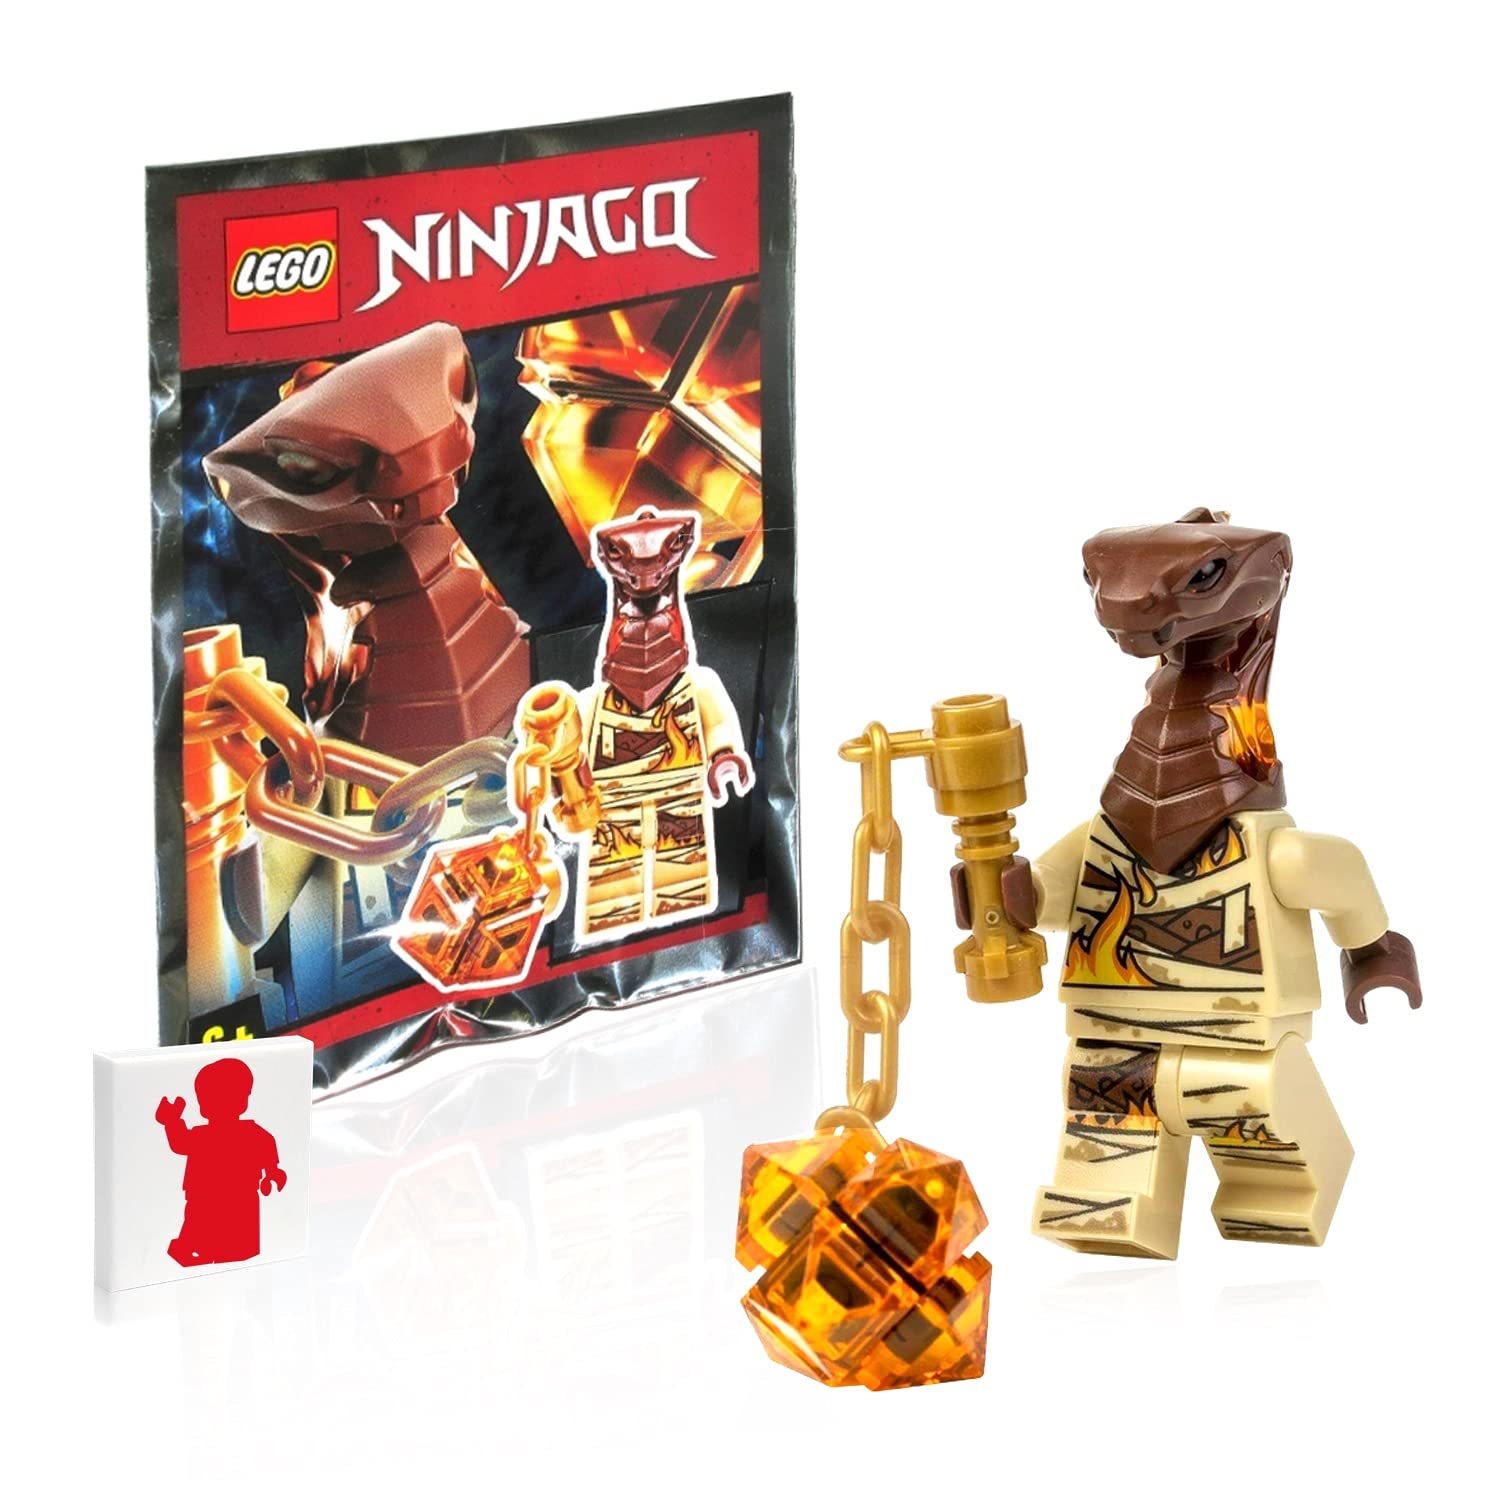 LEGO Ninjago Limited Edition Minifigure Pyro Whipper New, Genuine LEGO